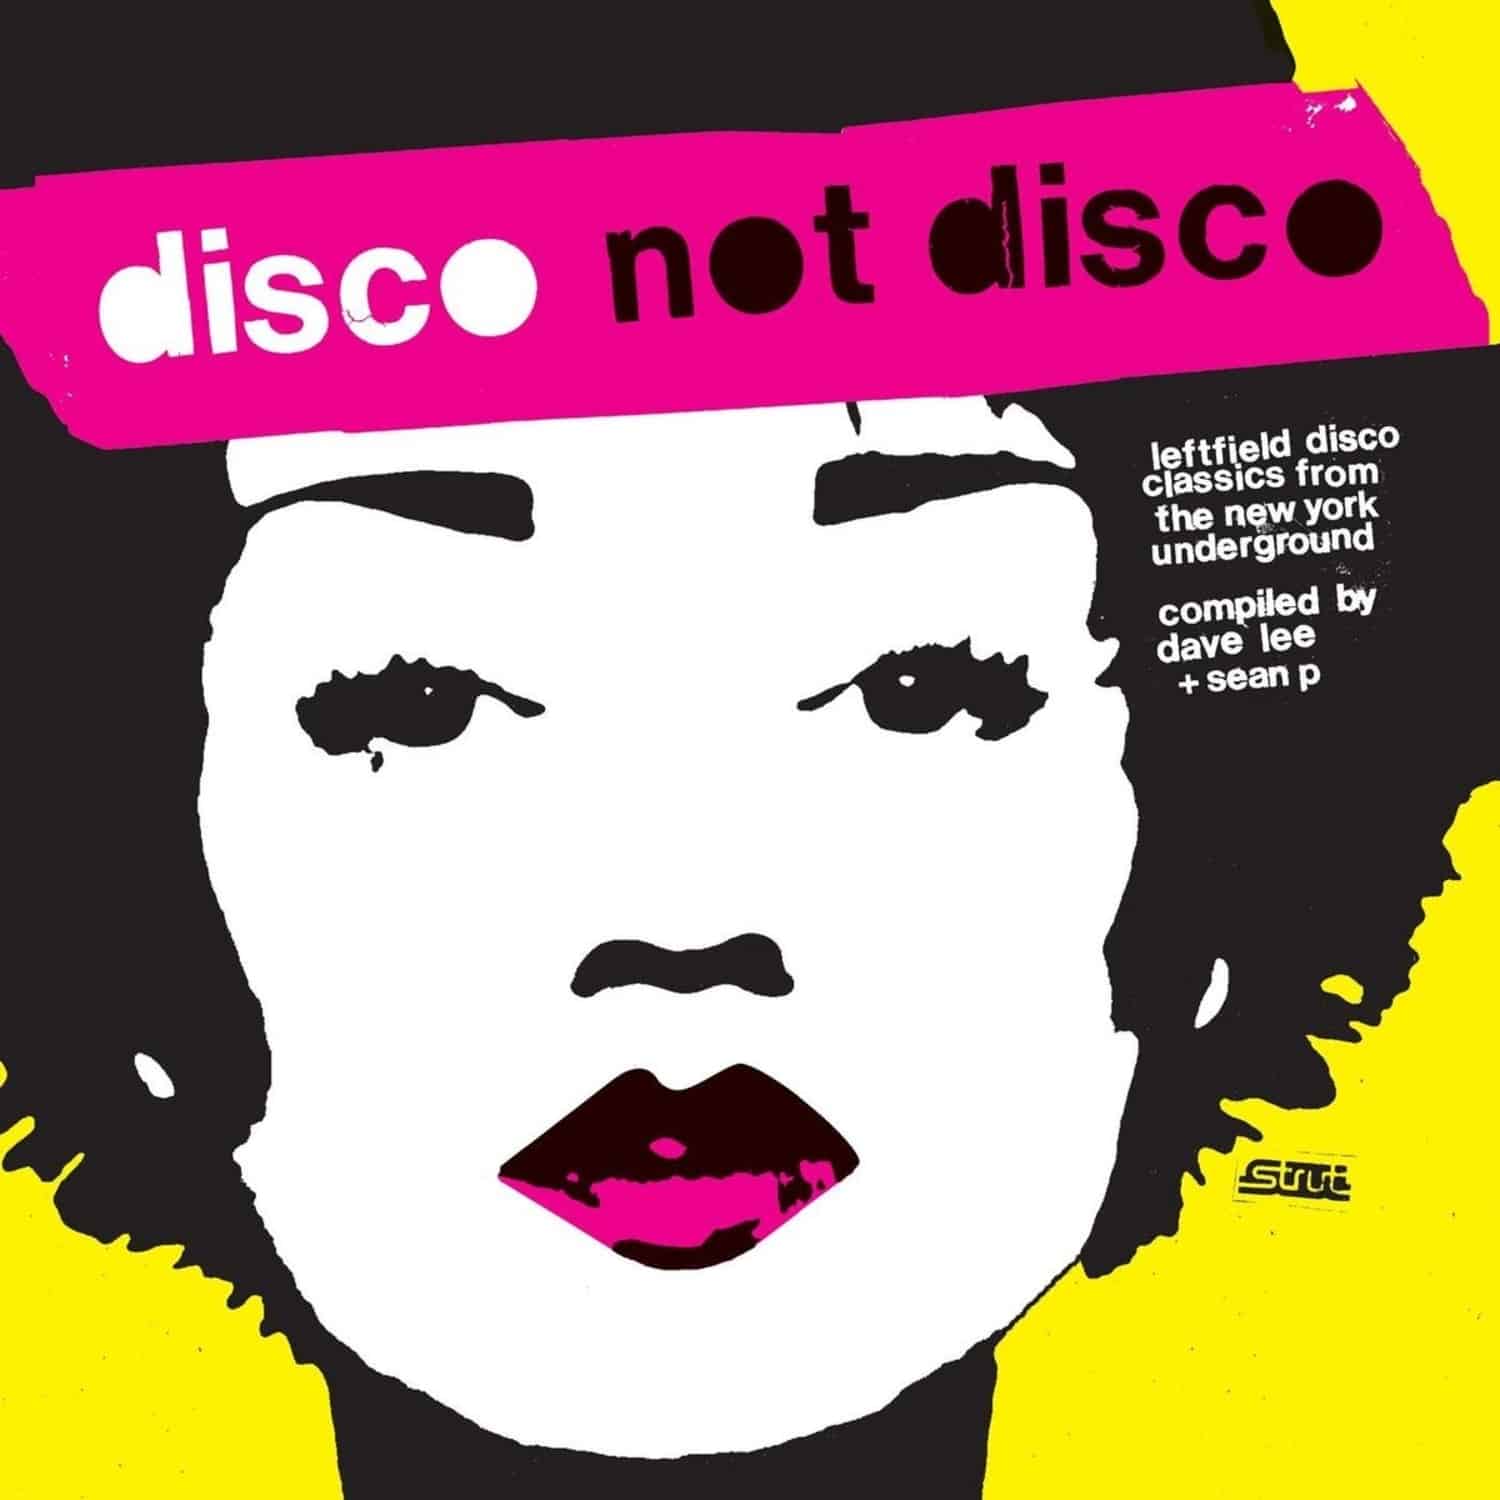 Various Artists / Dave Lee / Sean P - DISCO NOT DISCO 